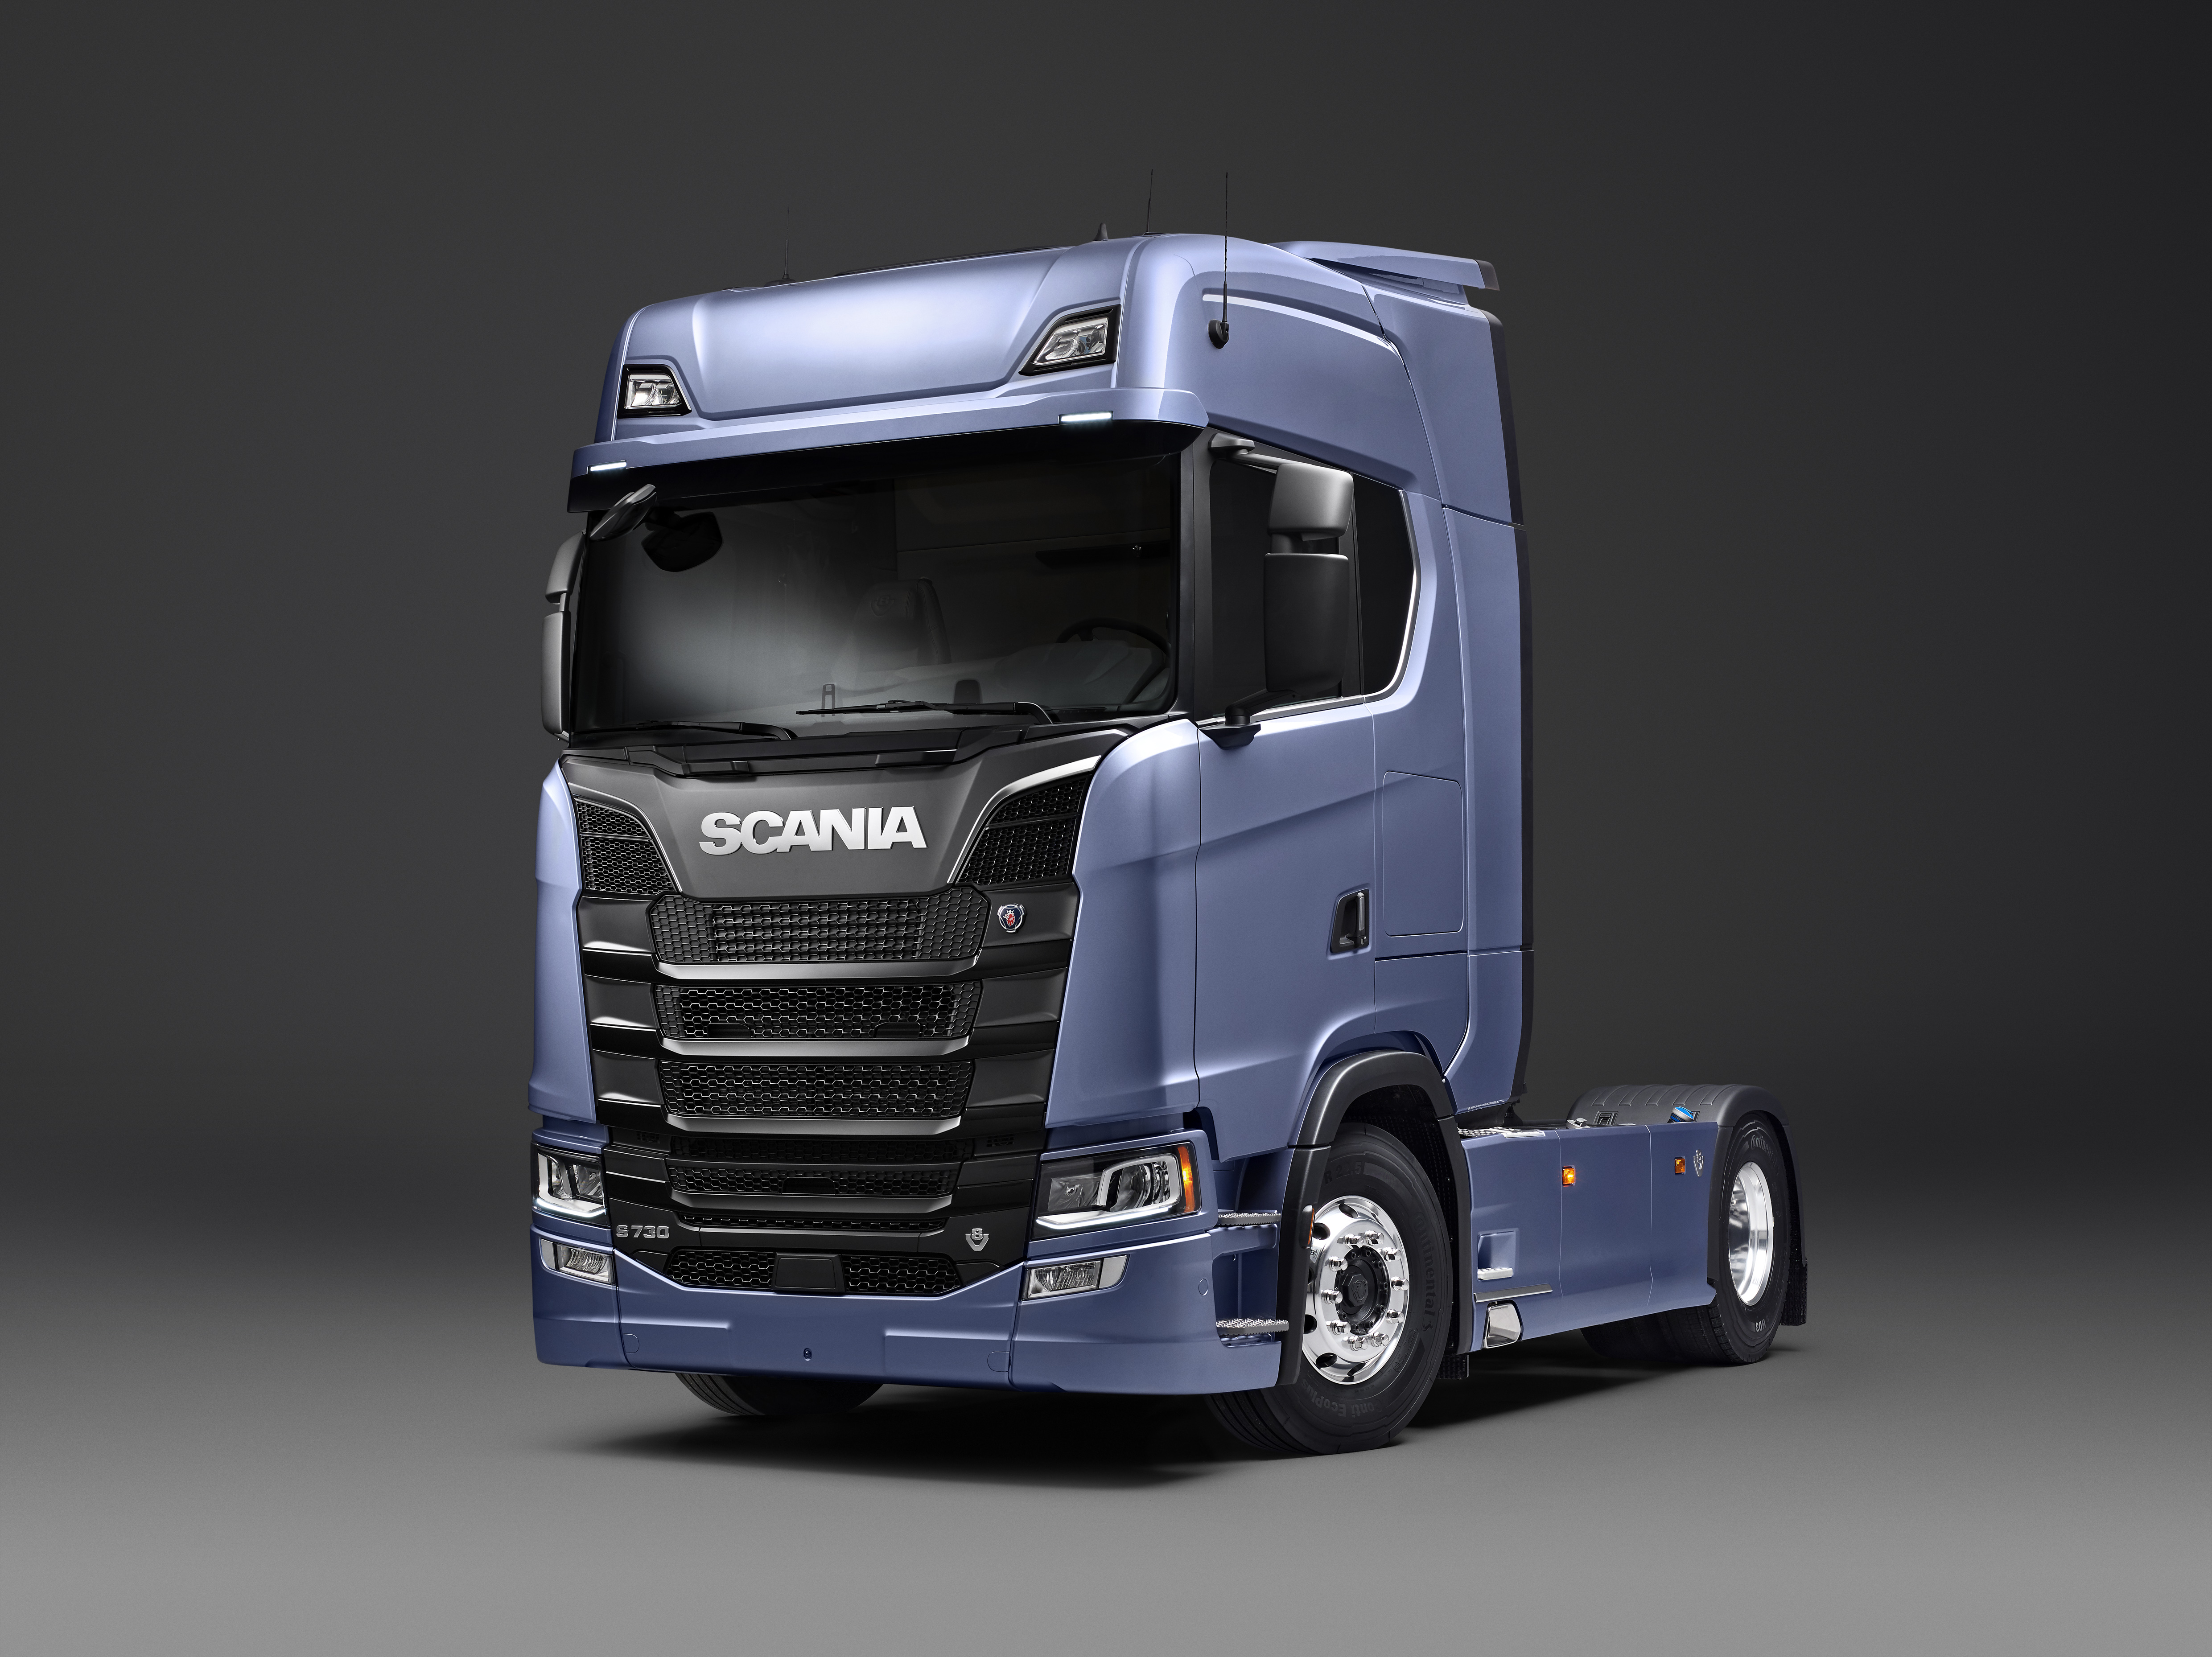 Scania invest £1.8 billion in new truck range Logistics Manager